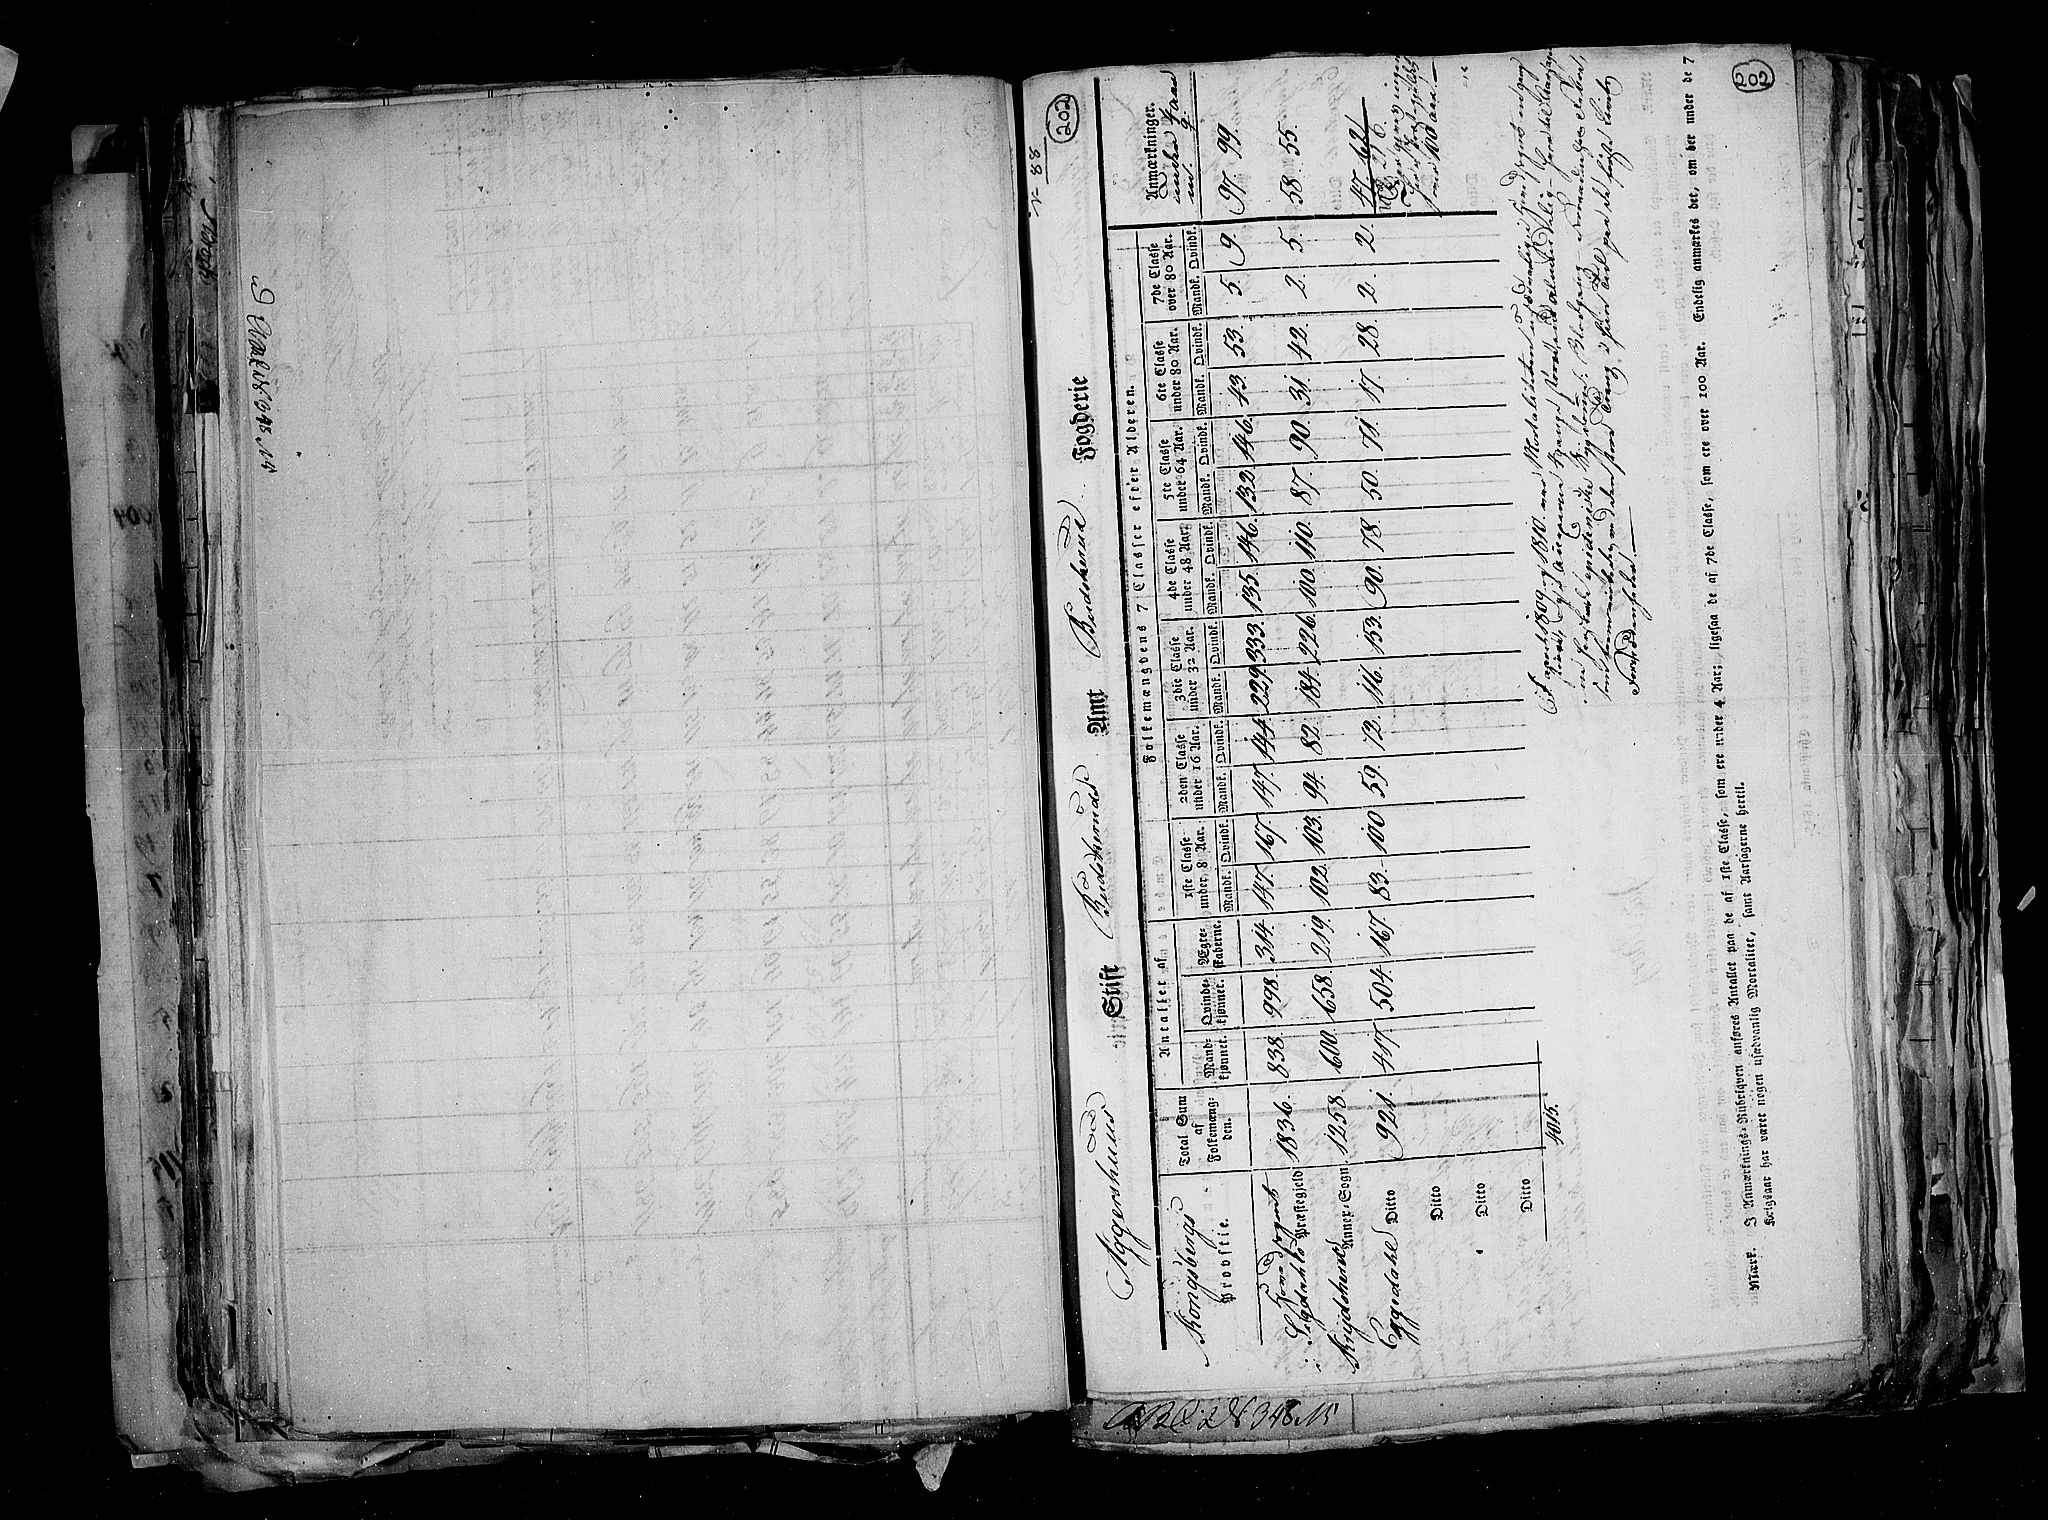 RA, Census 1815, vol. 1: Akershus stift and Kristiansand stift, 1815, p. 146